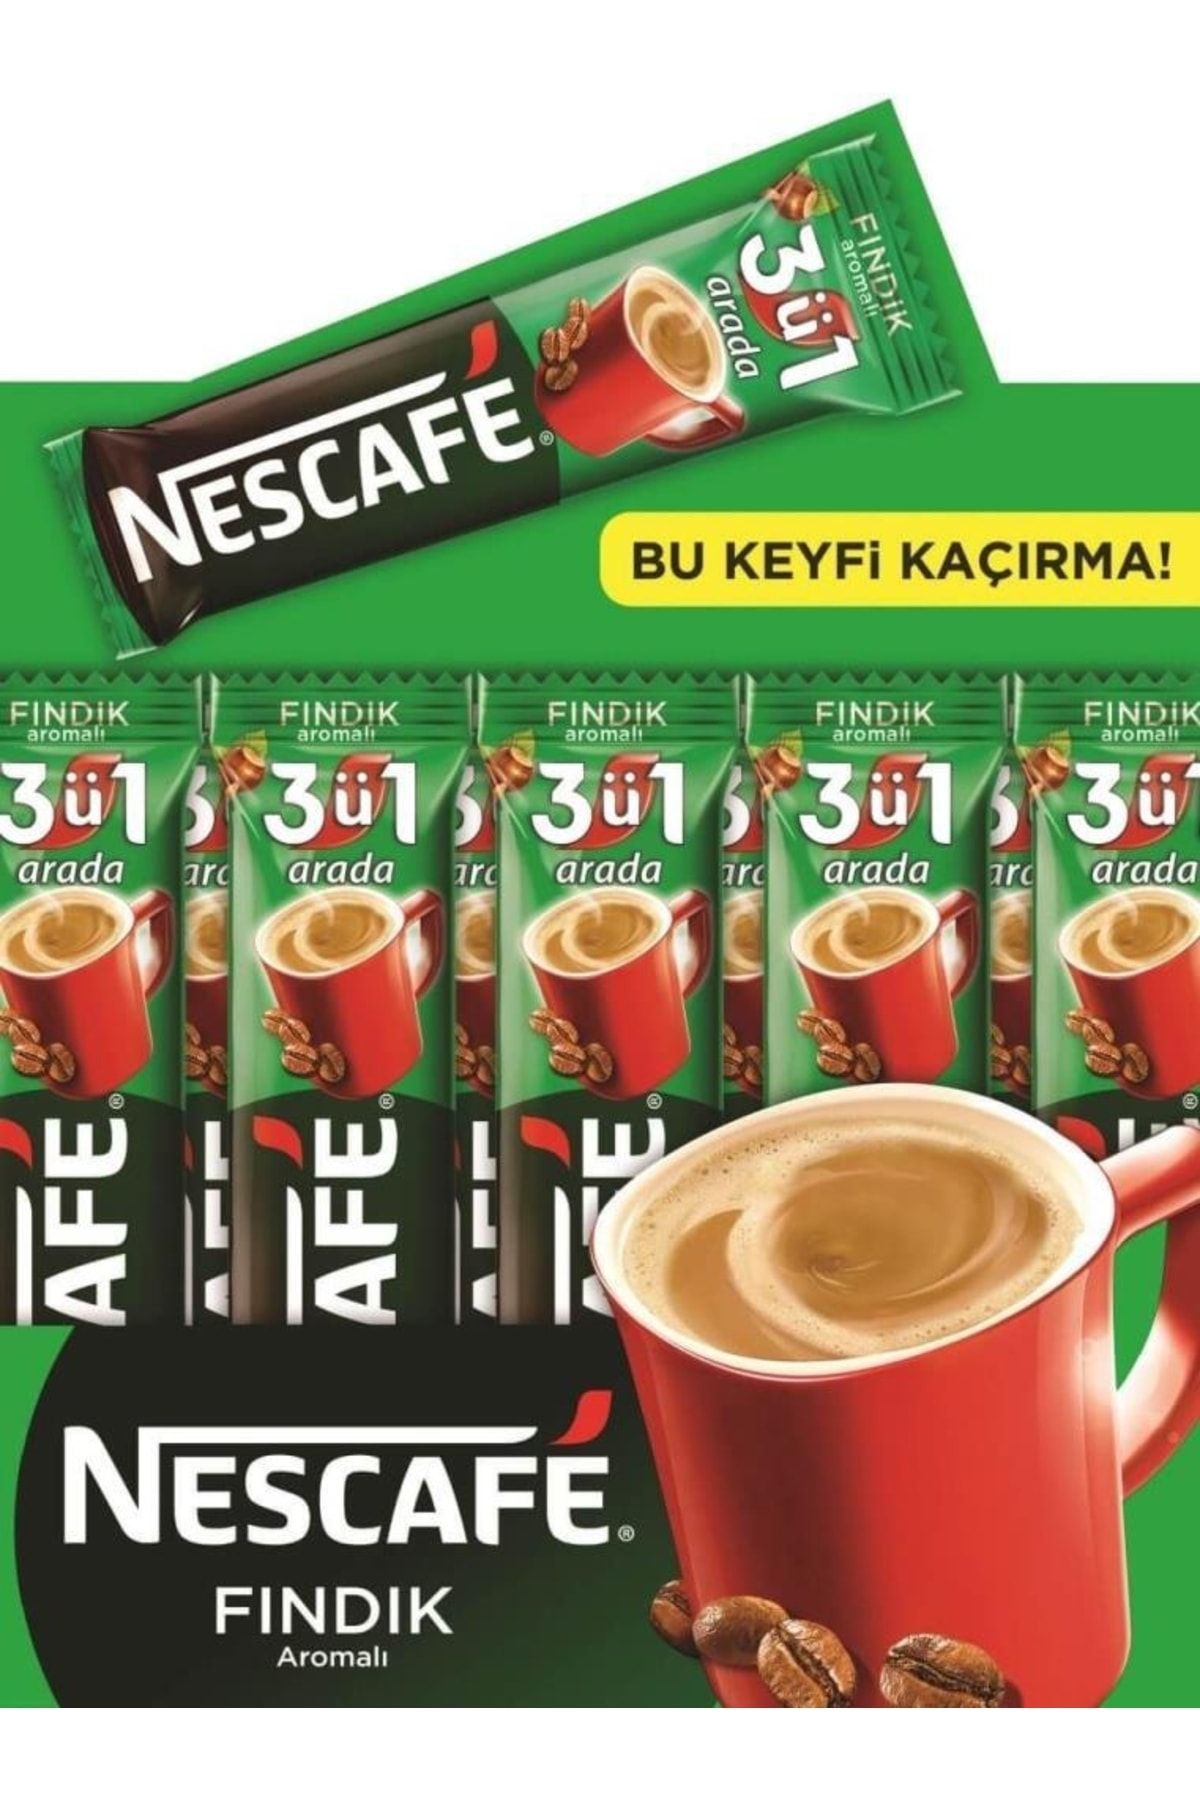 Nestle Nescafe 3ü1 Arada Fındıklı 48 Adet 17g Leia Hazelnut 12515292